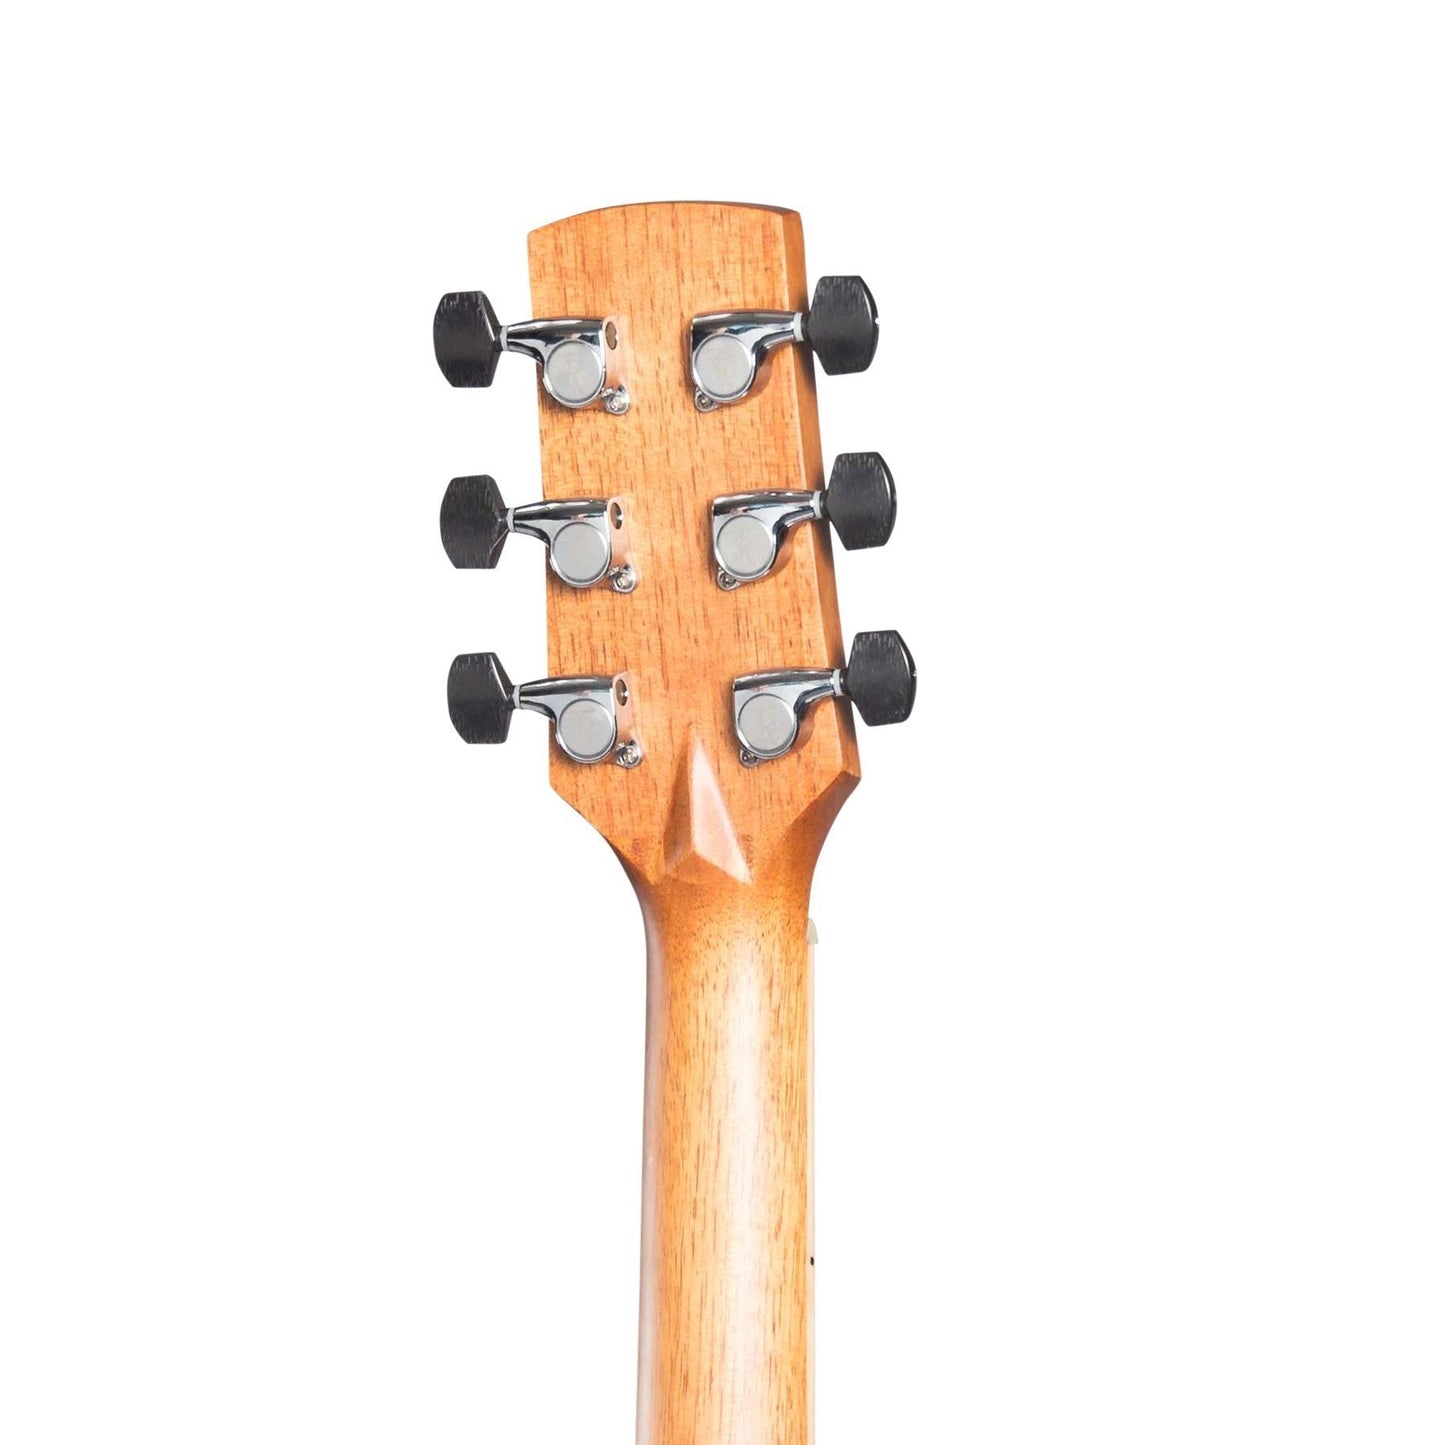 Timberidge '1 Series' Spruce Solid Top Acoustic-Electric Traveller Mini Guitar (Natural Satin)